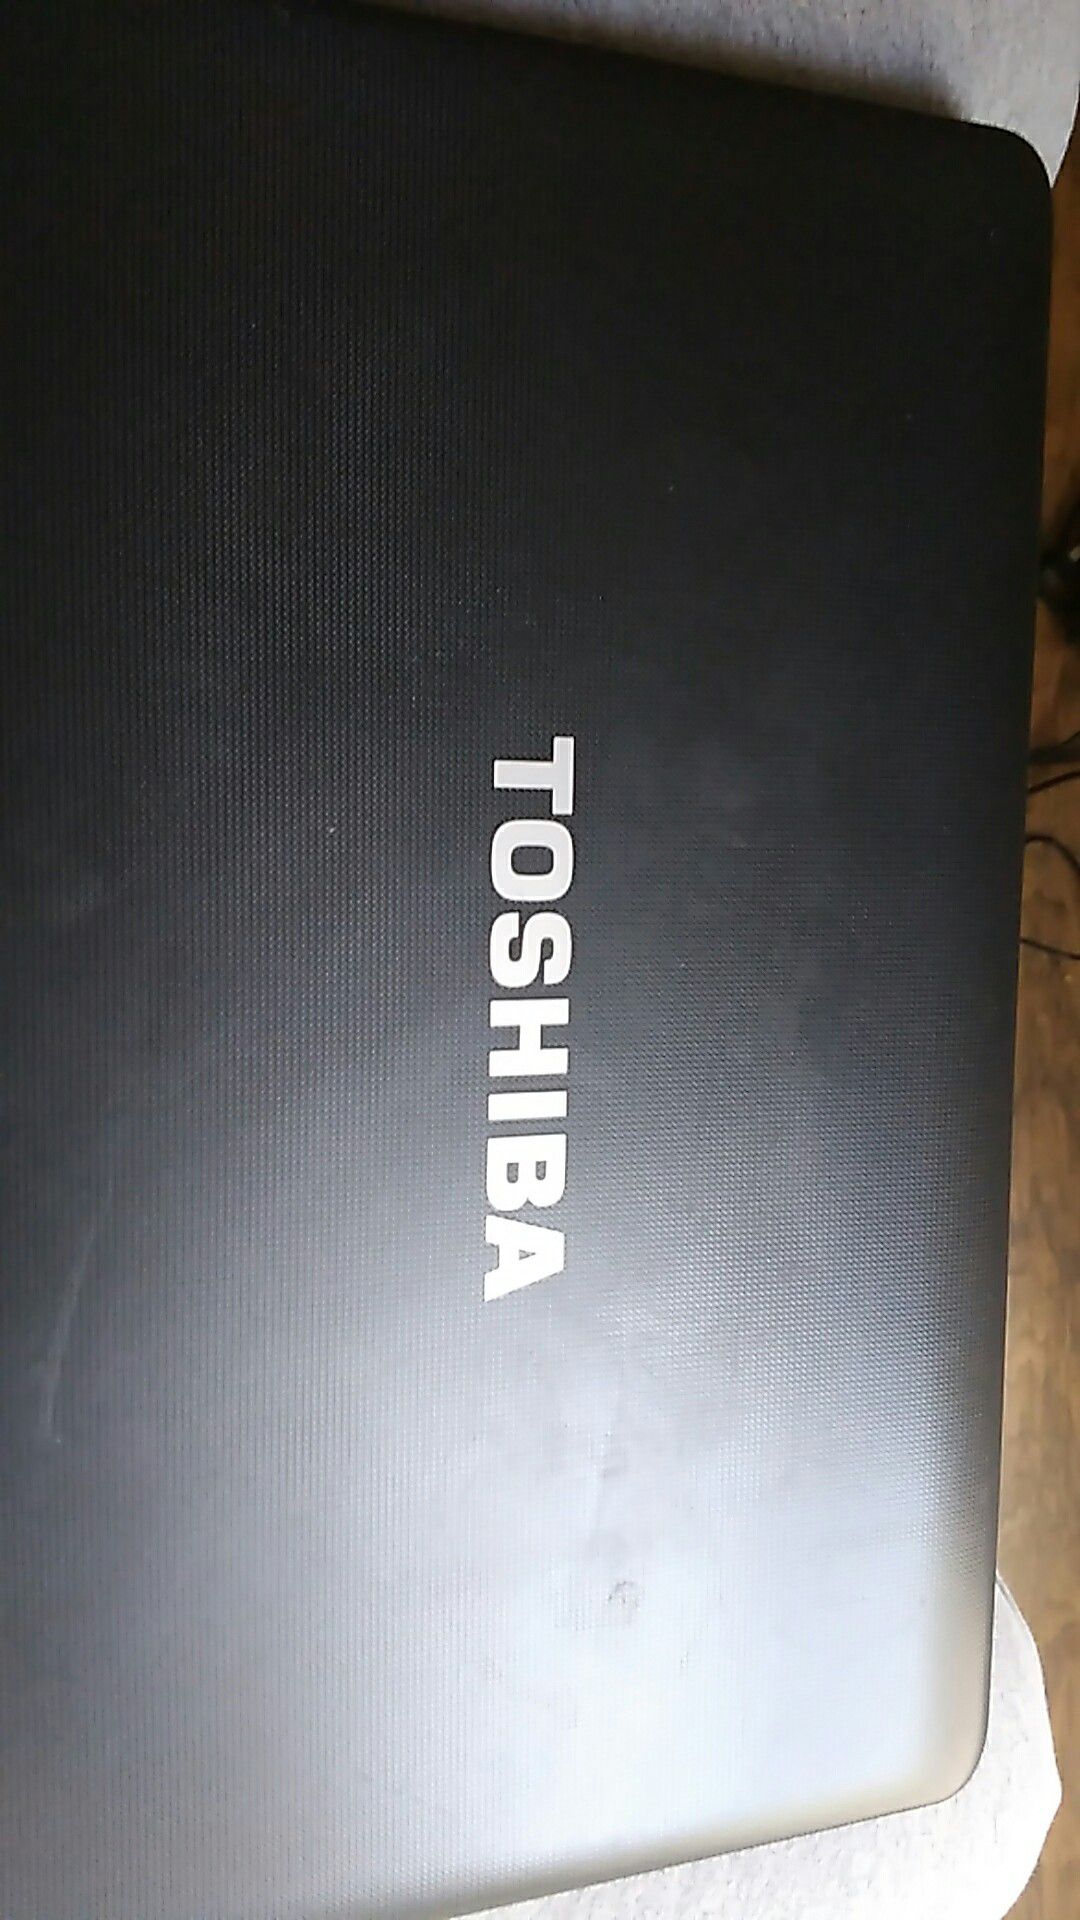 Toshiba satellite c655 laptop